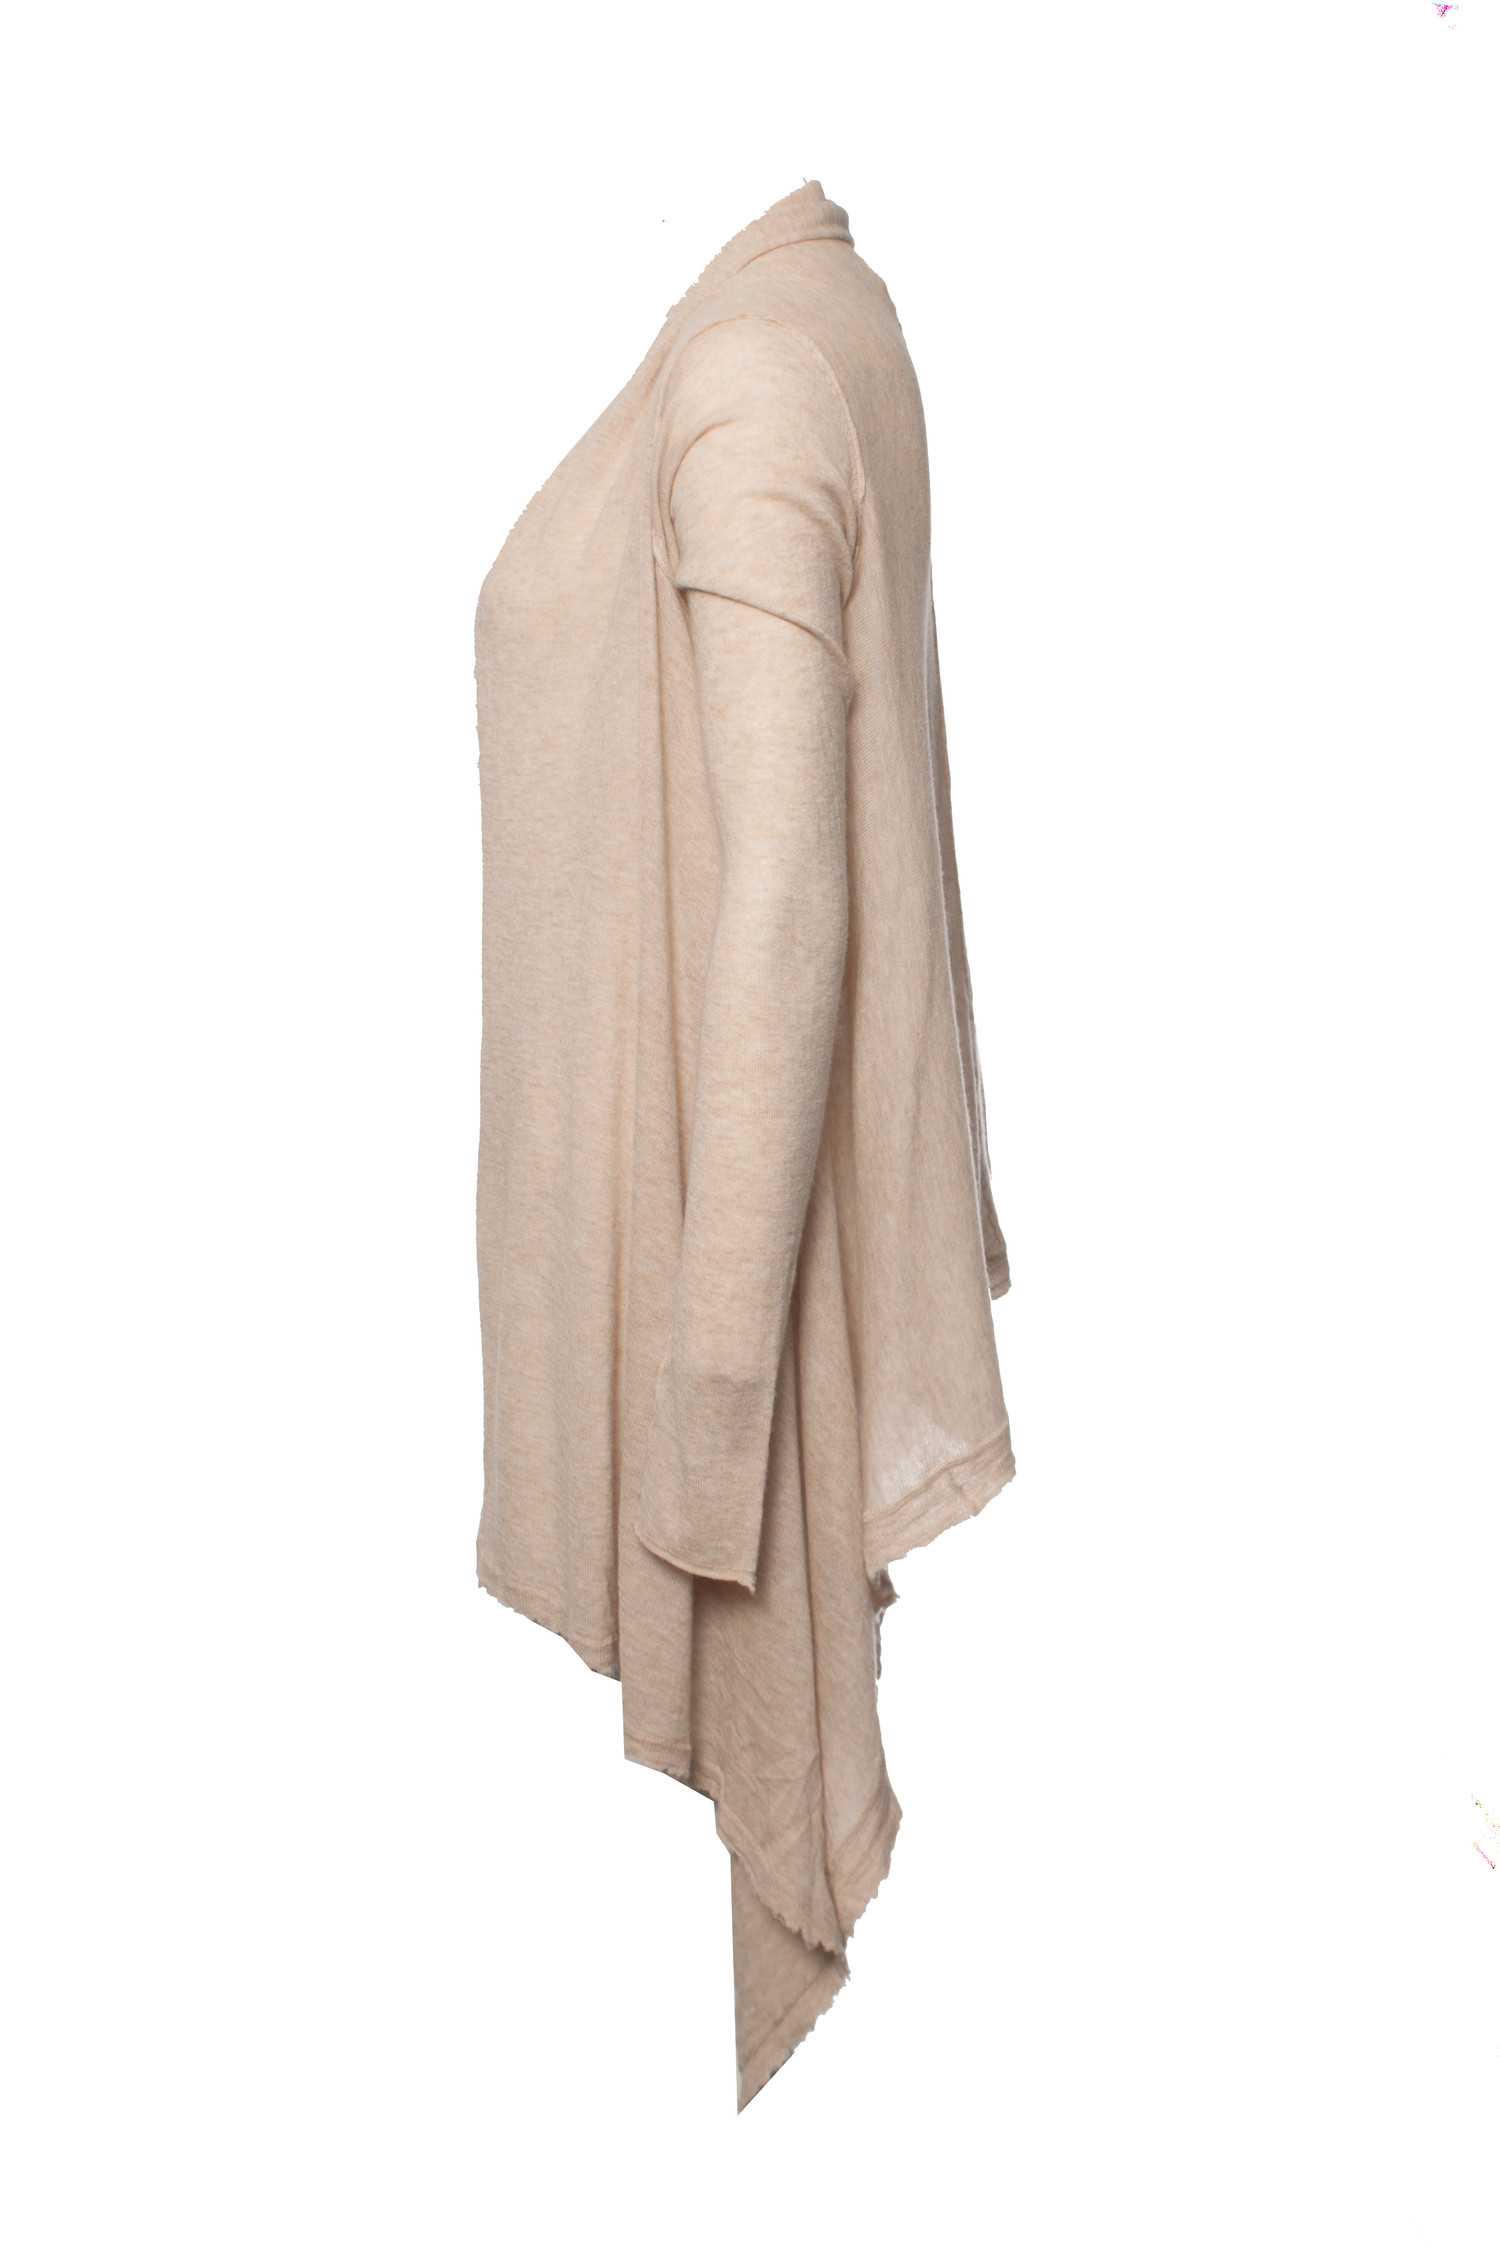 Zadig & Voltaire, beige/brown cashmere cardigan in size U/one size ...